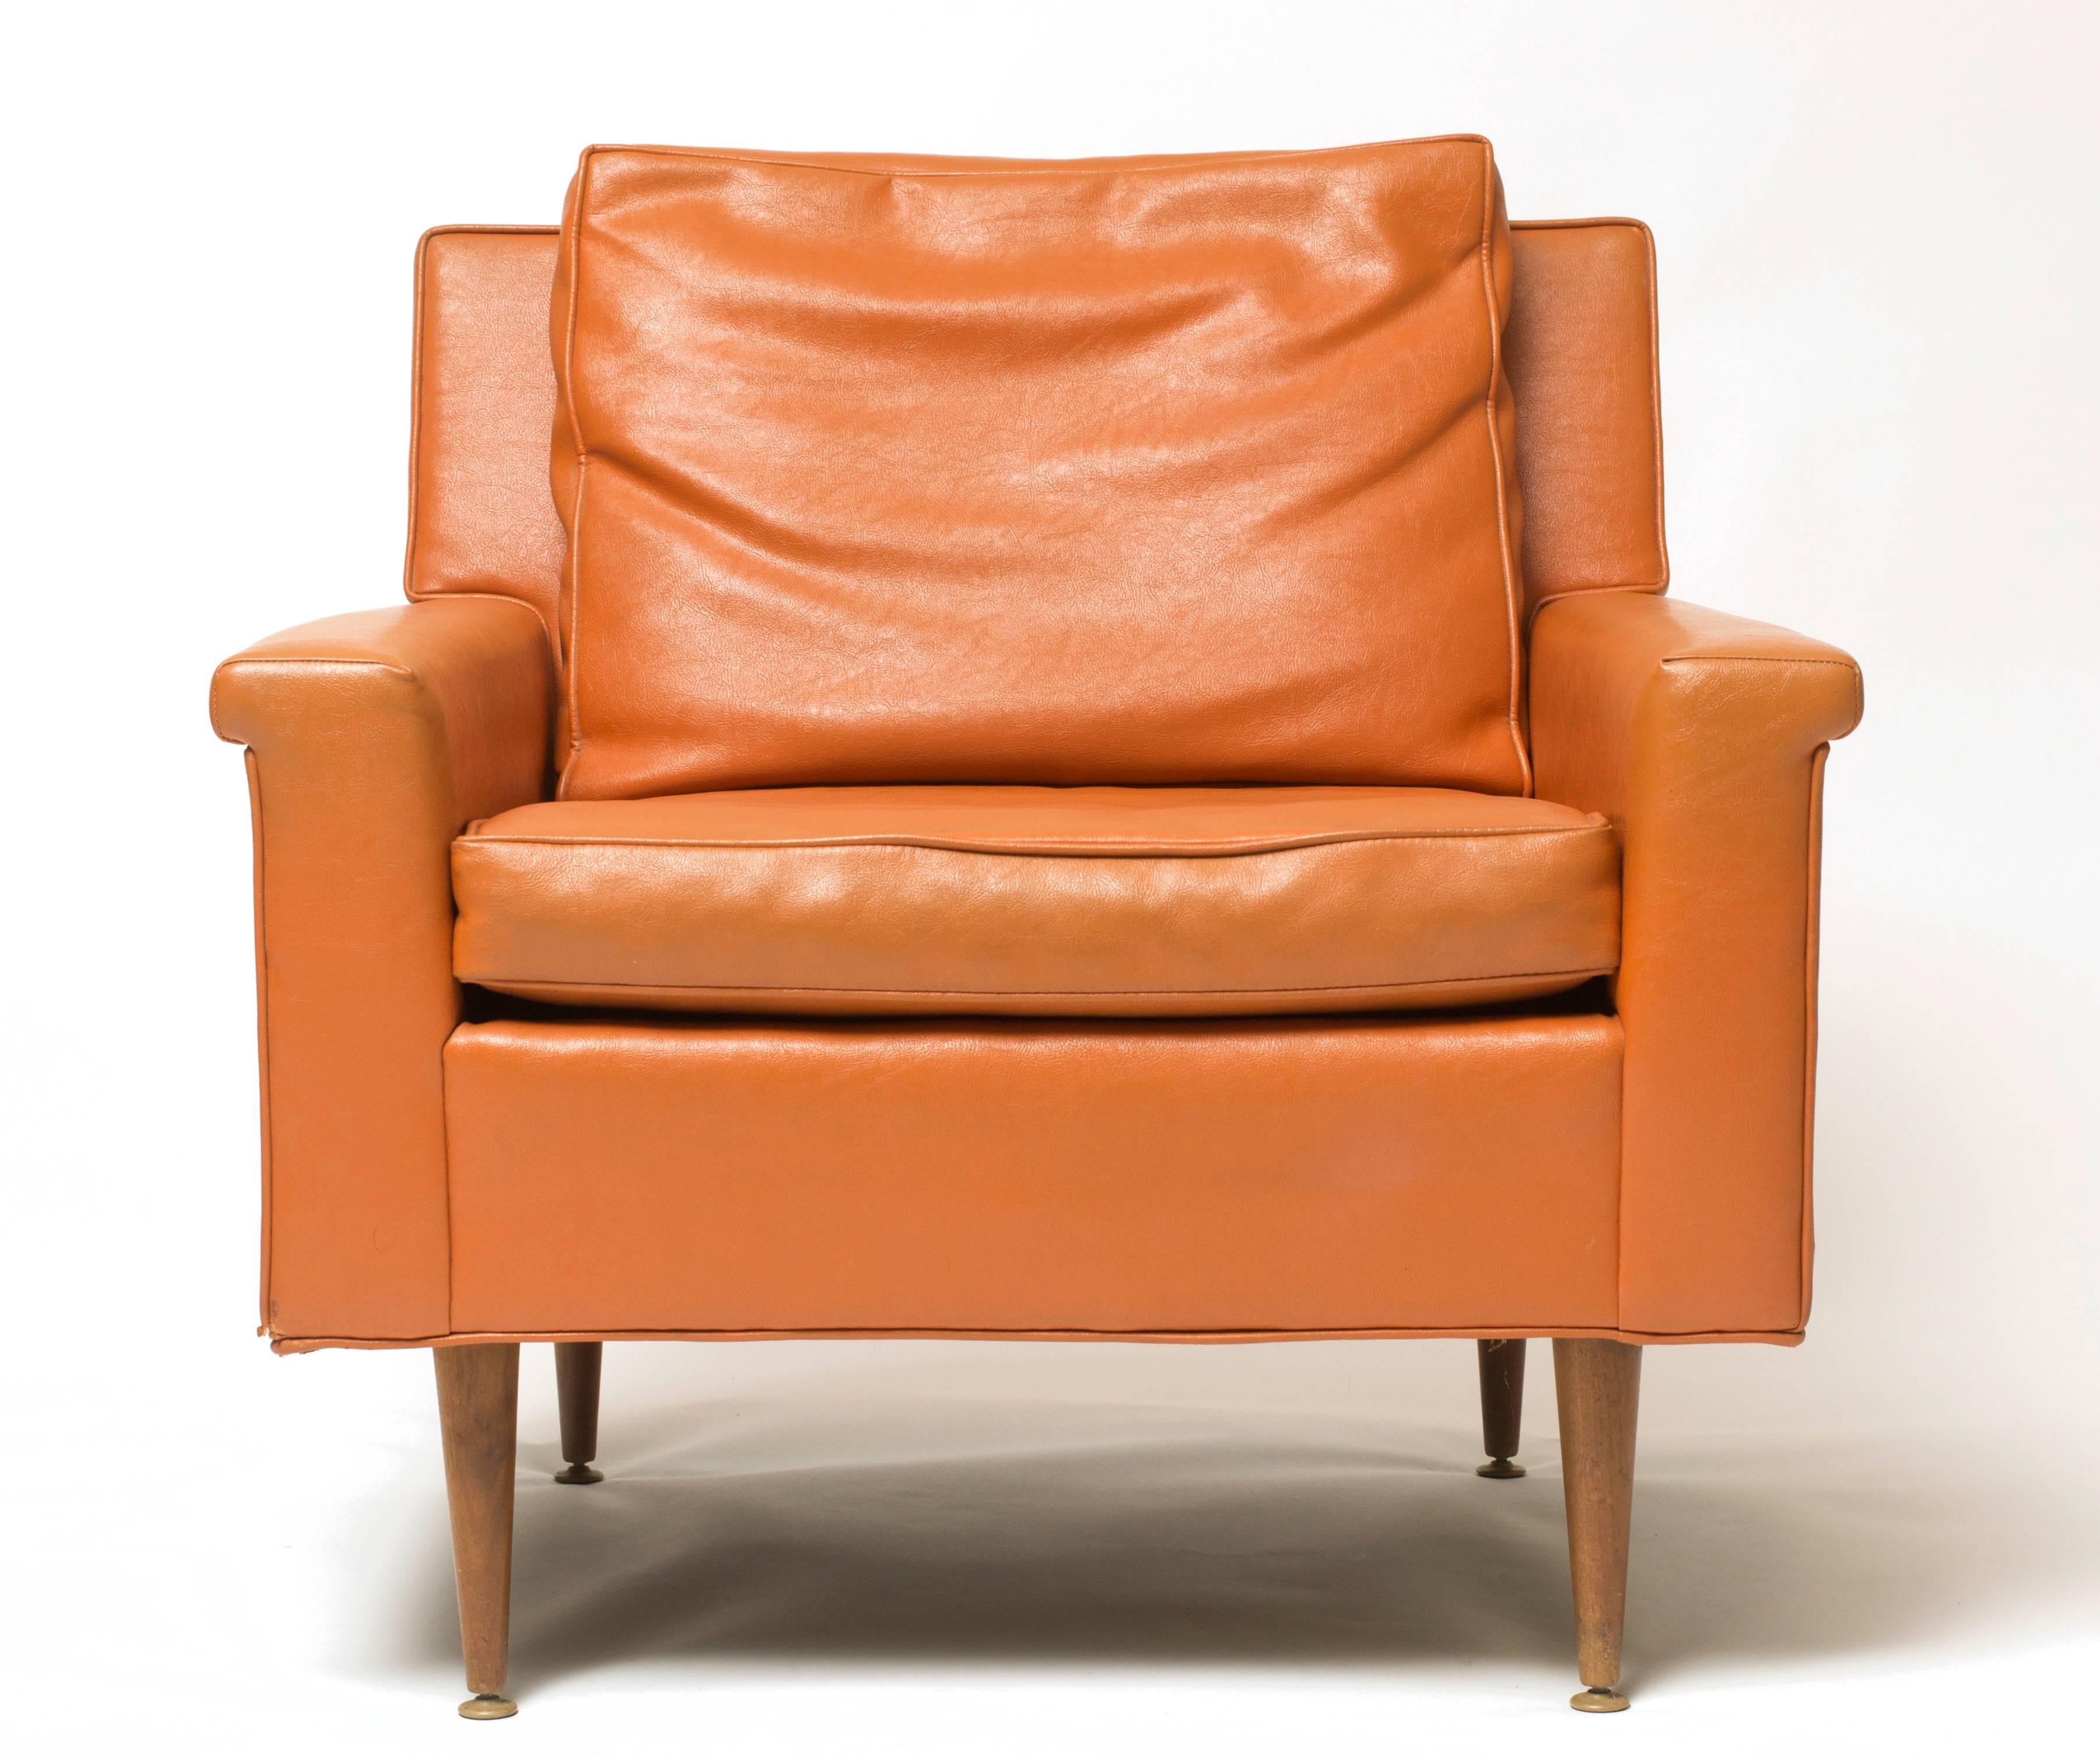 A rare Milo Baughman design featuring a durable burnt orange vinyl upholstery on sleek tapered wooden legs.